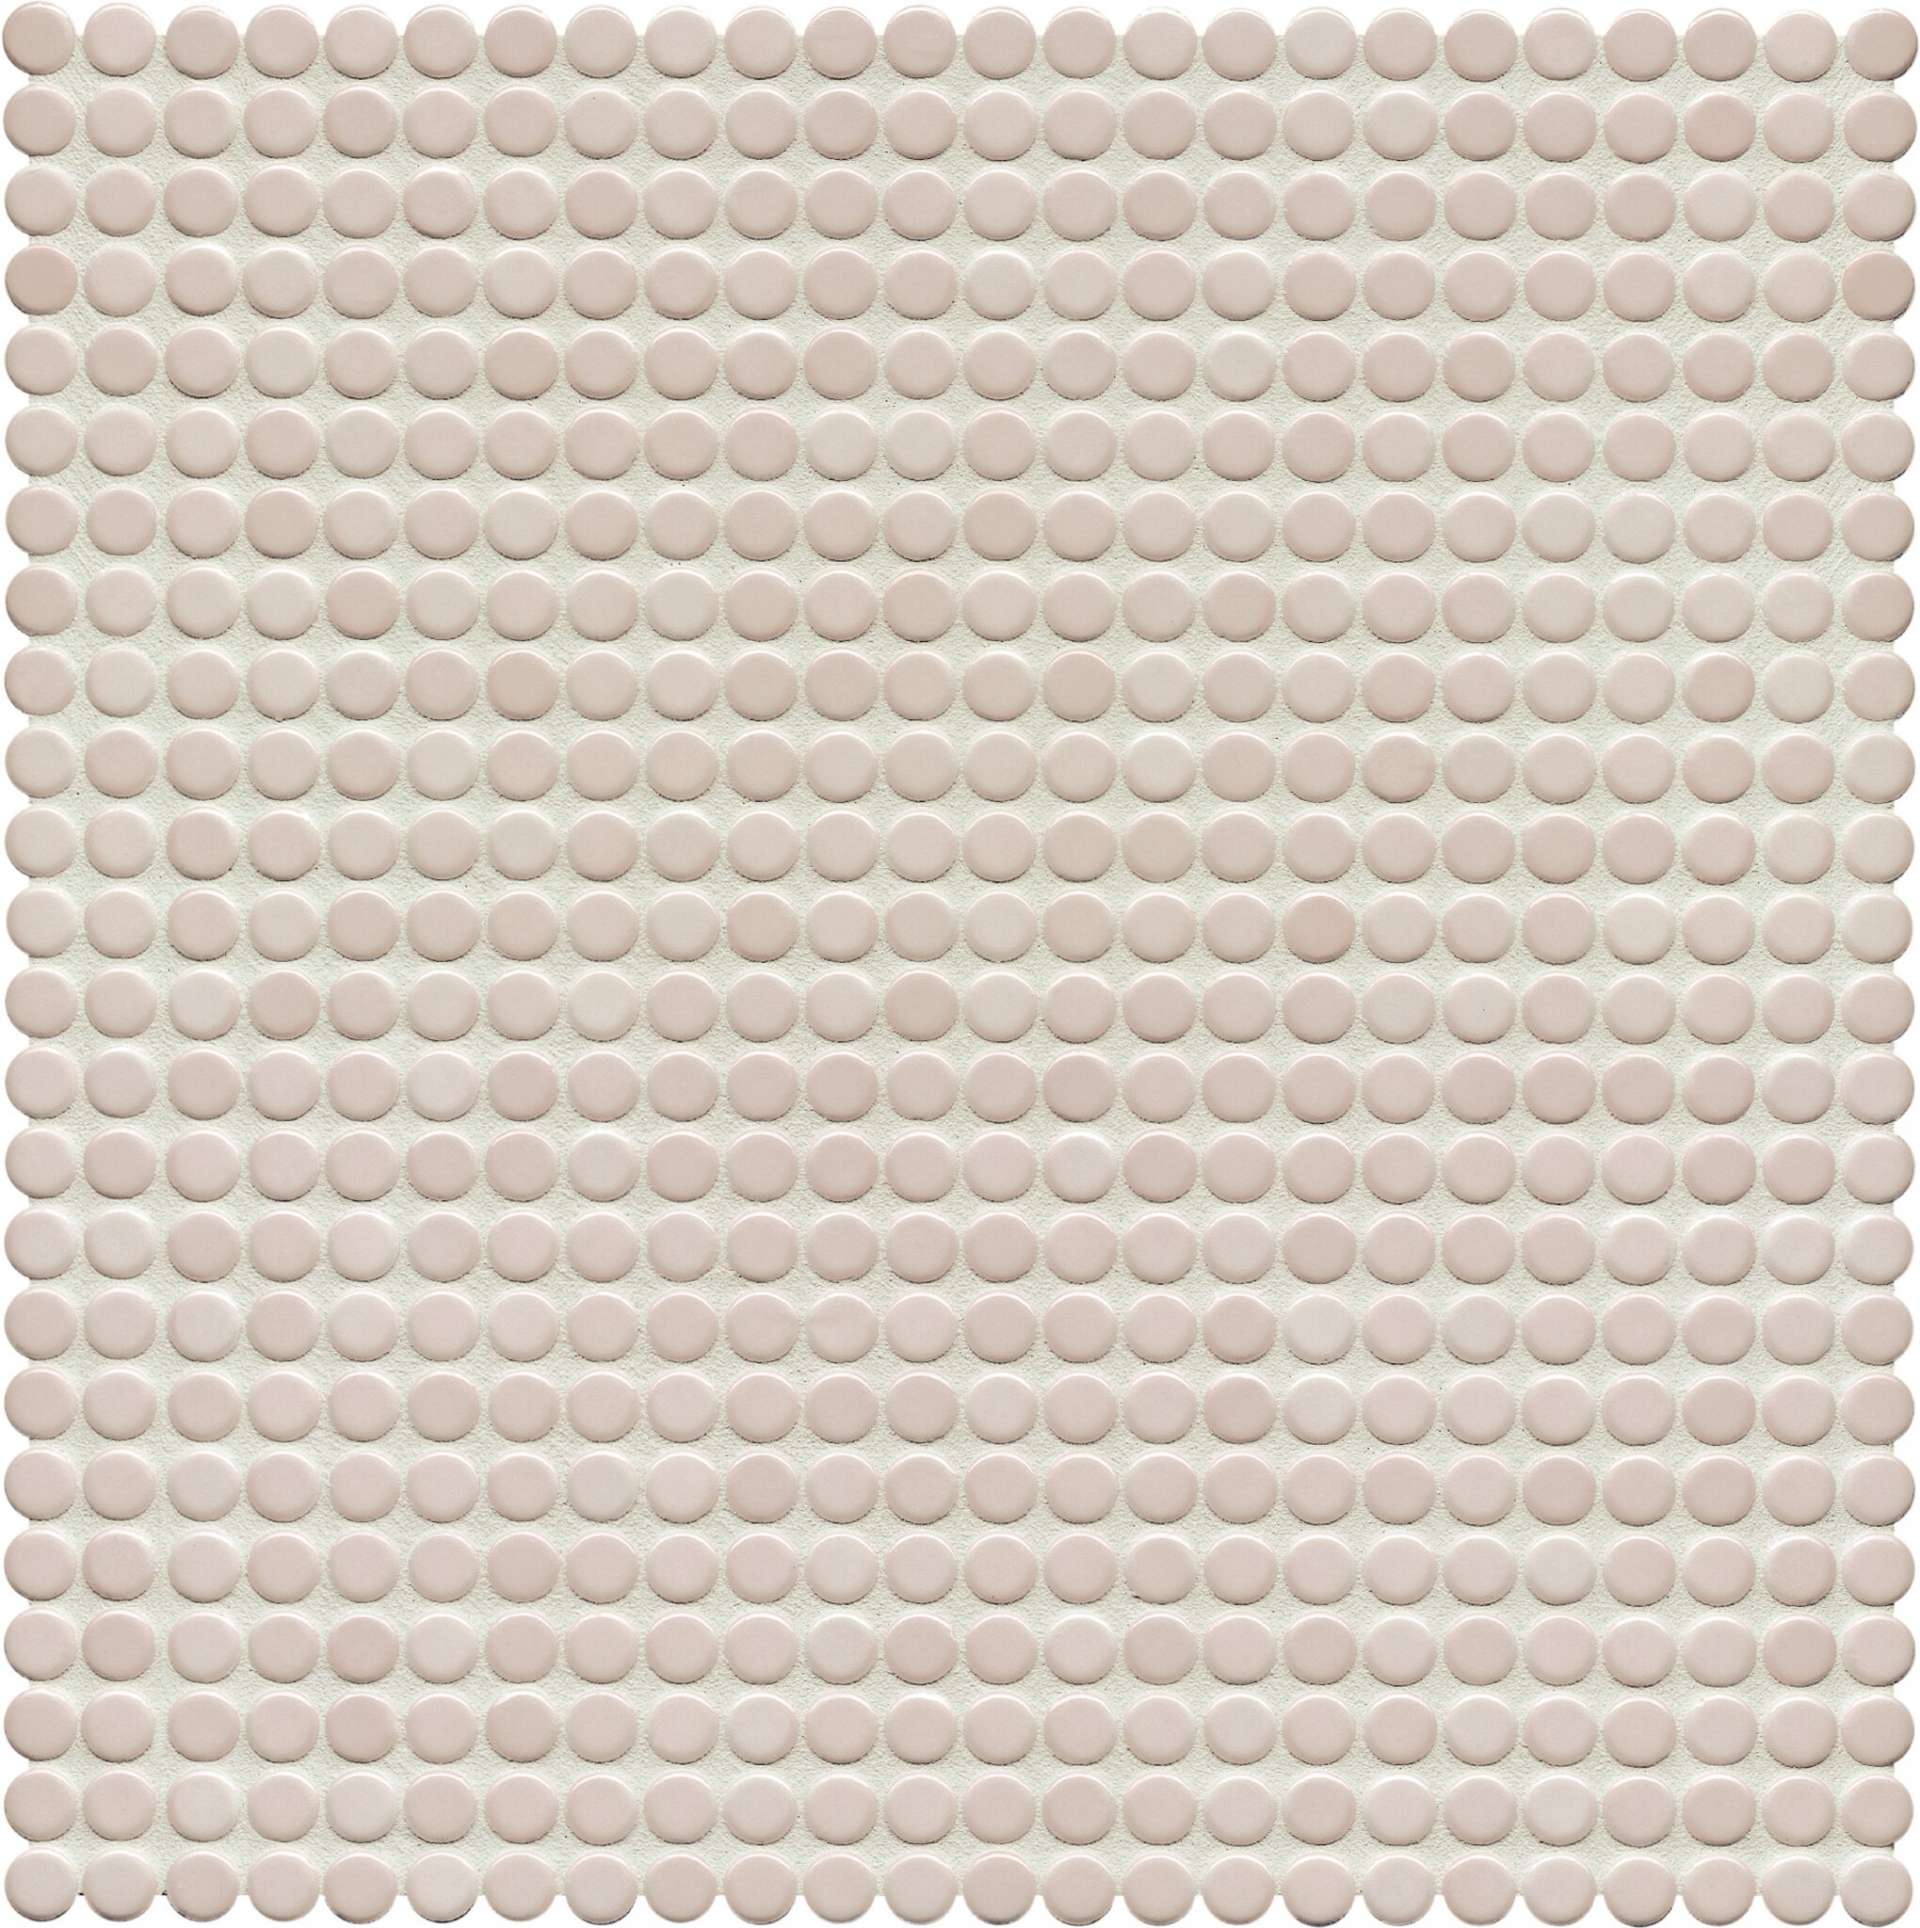 Мозаика Jasba Loop Elfenbein Hell 40002H-44, цвет бежевый, поверхность глянцевая, круг и овал, 316x316